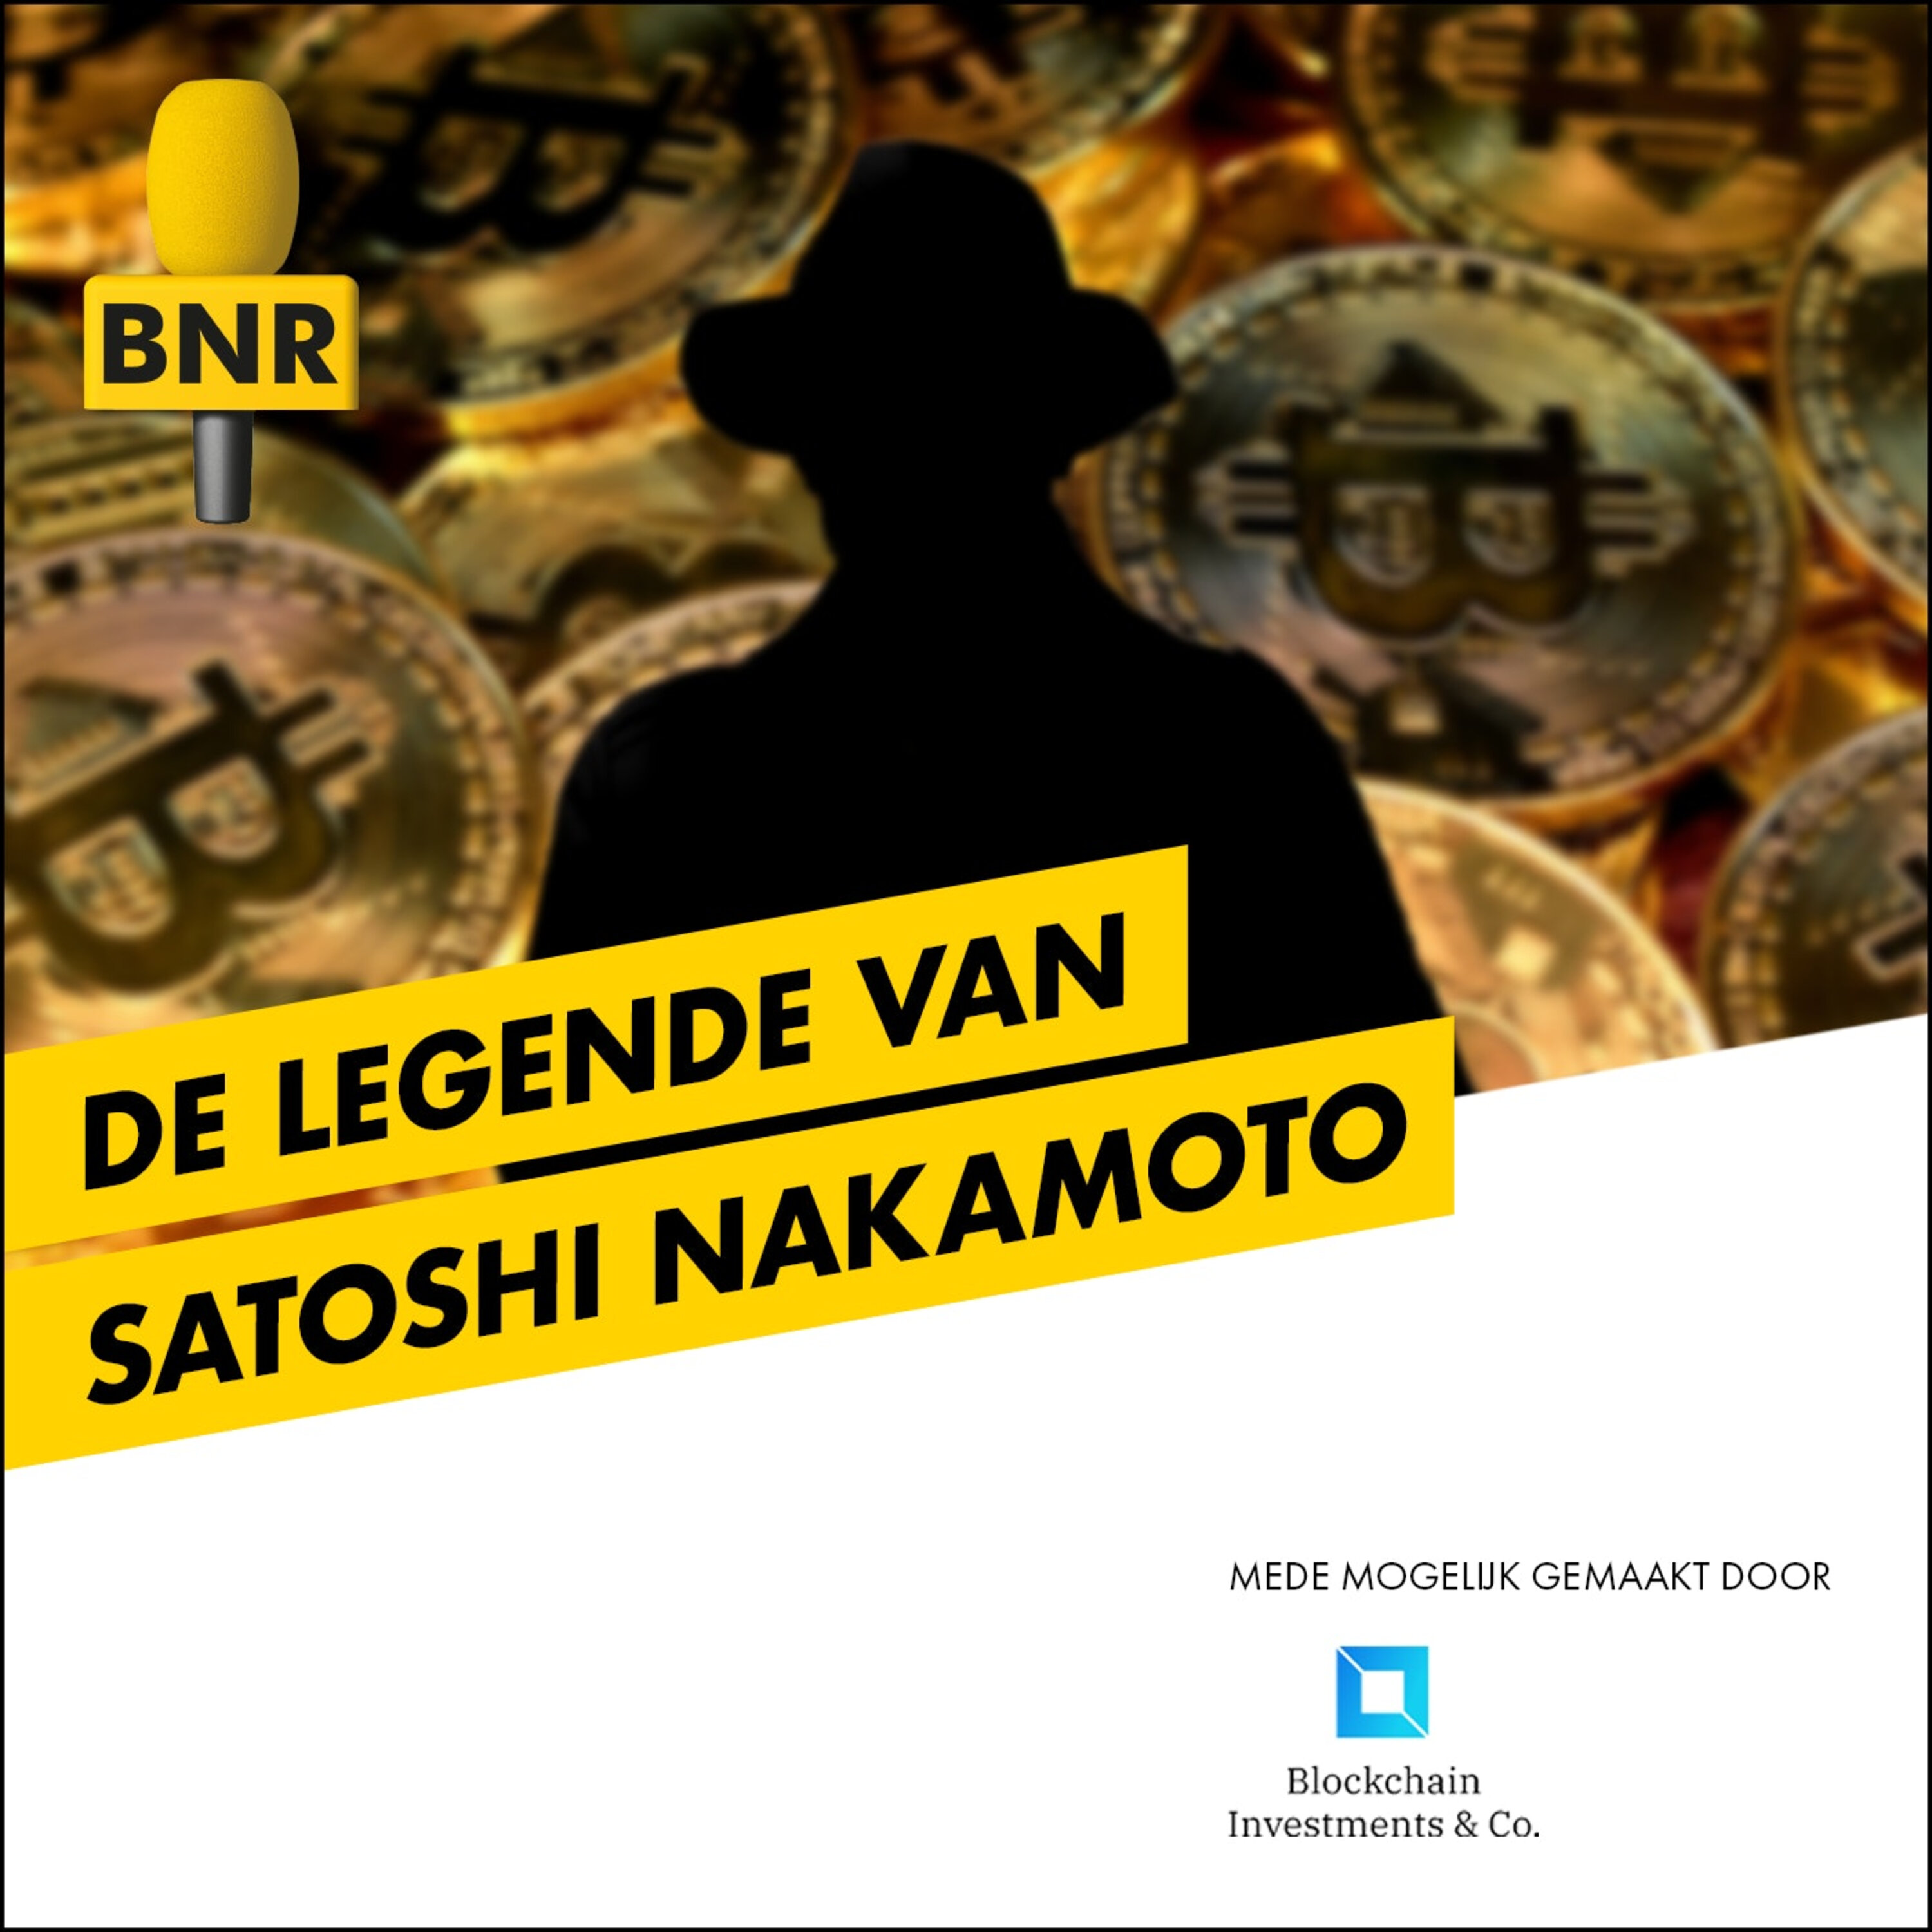 De Legende van Satoshi Nakamoto | BNR logo